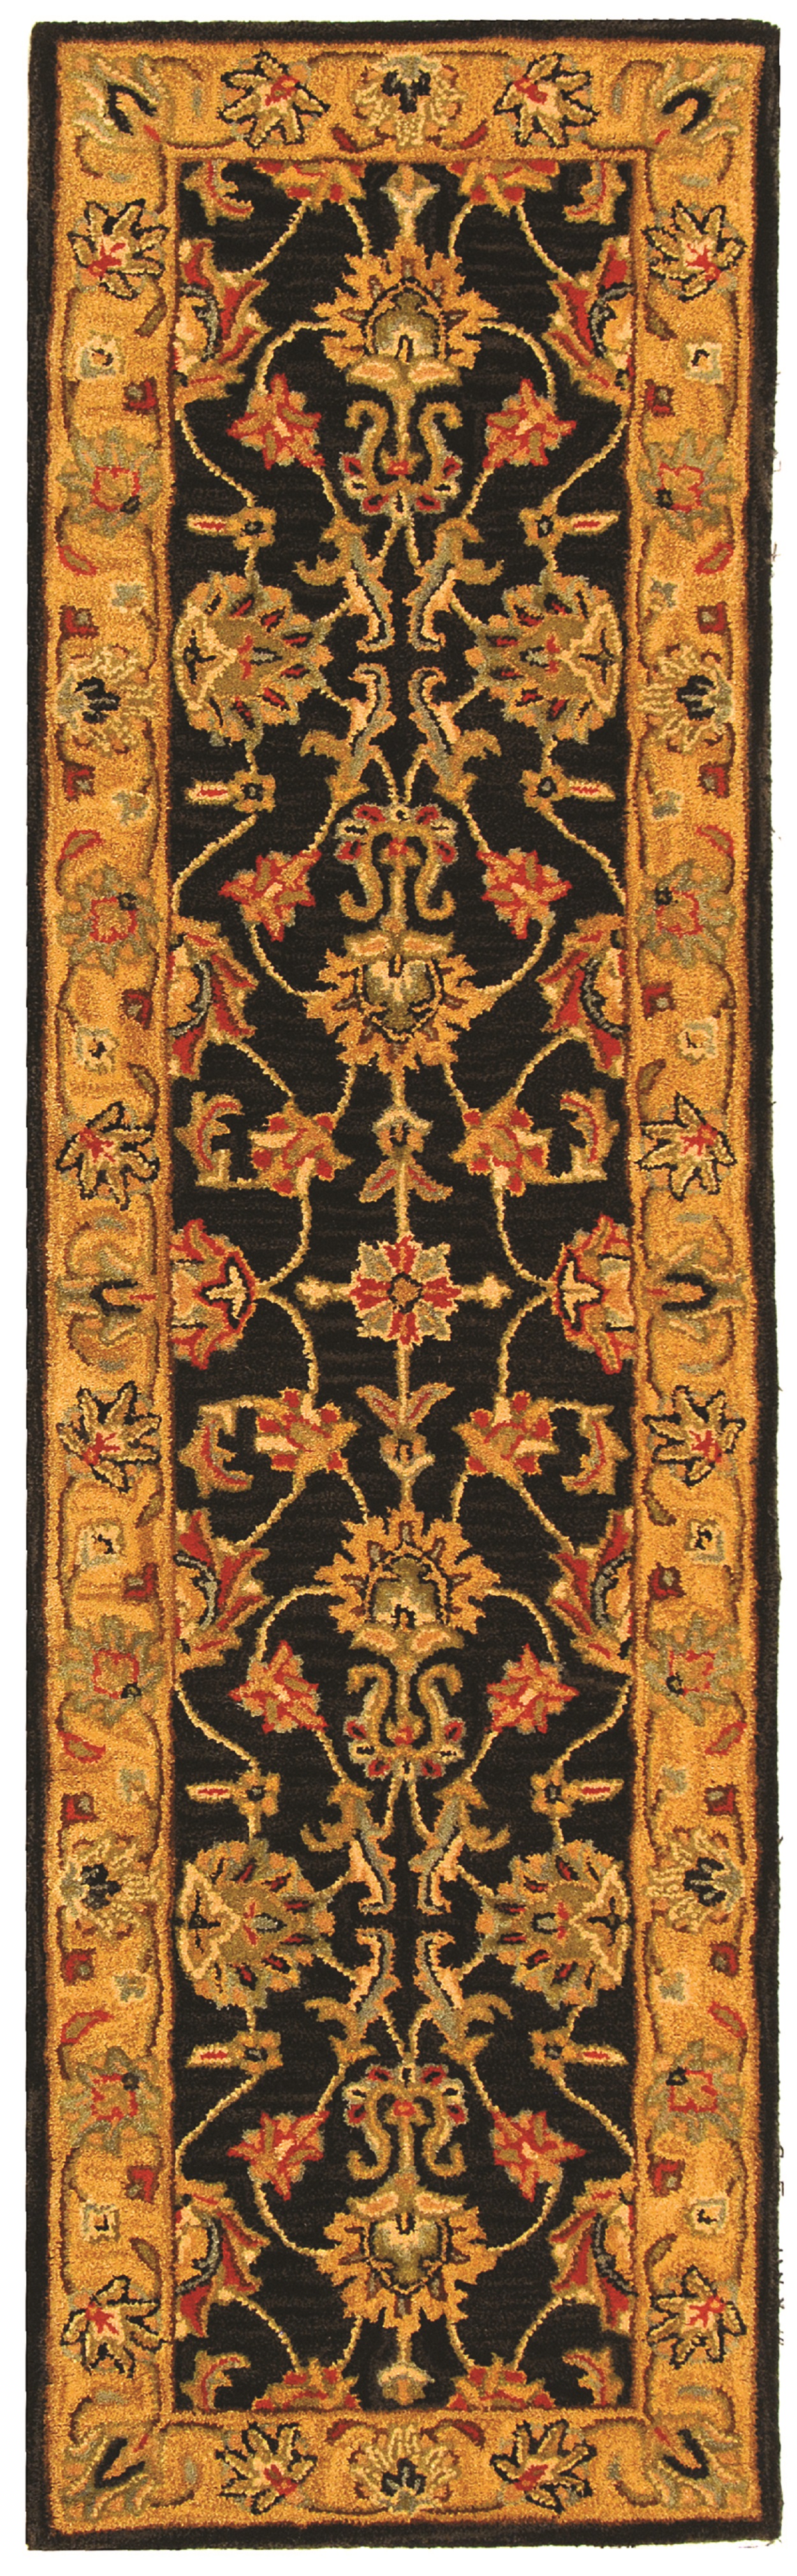 SAFAVIEH Heritage Regis Traditional Wool Runner Rug, Charcoal/Gold, 2'3" x 14' - image 1 of 10